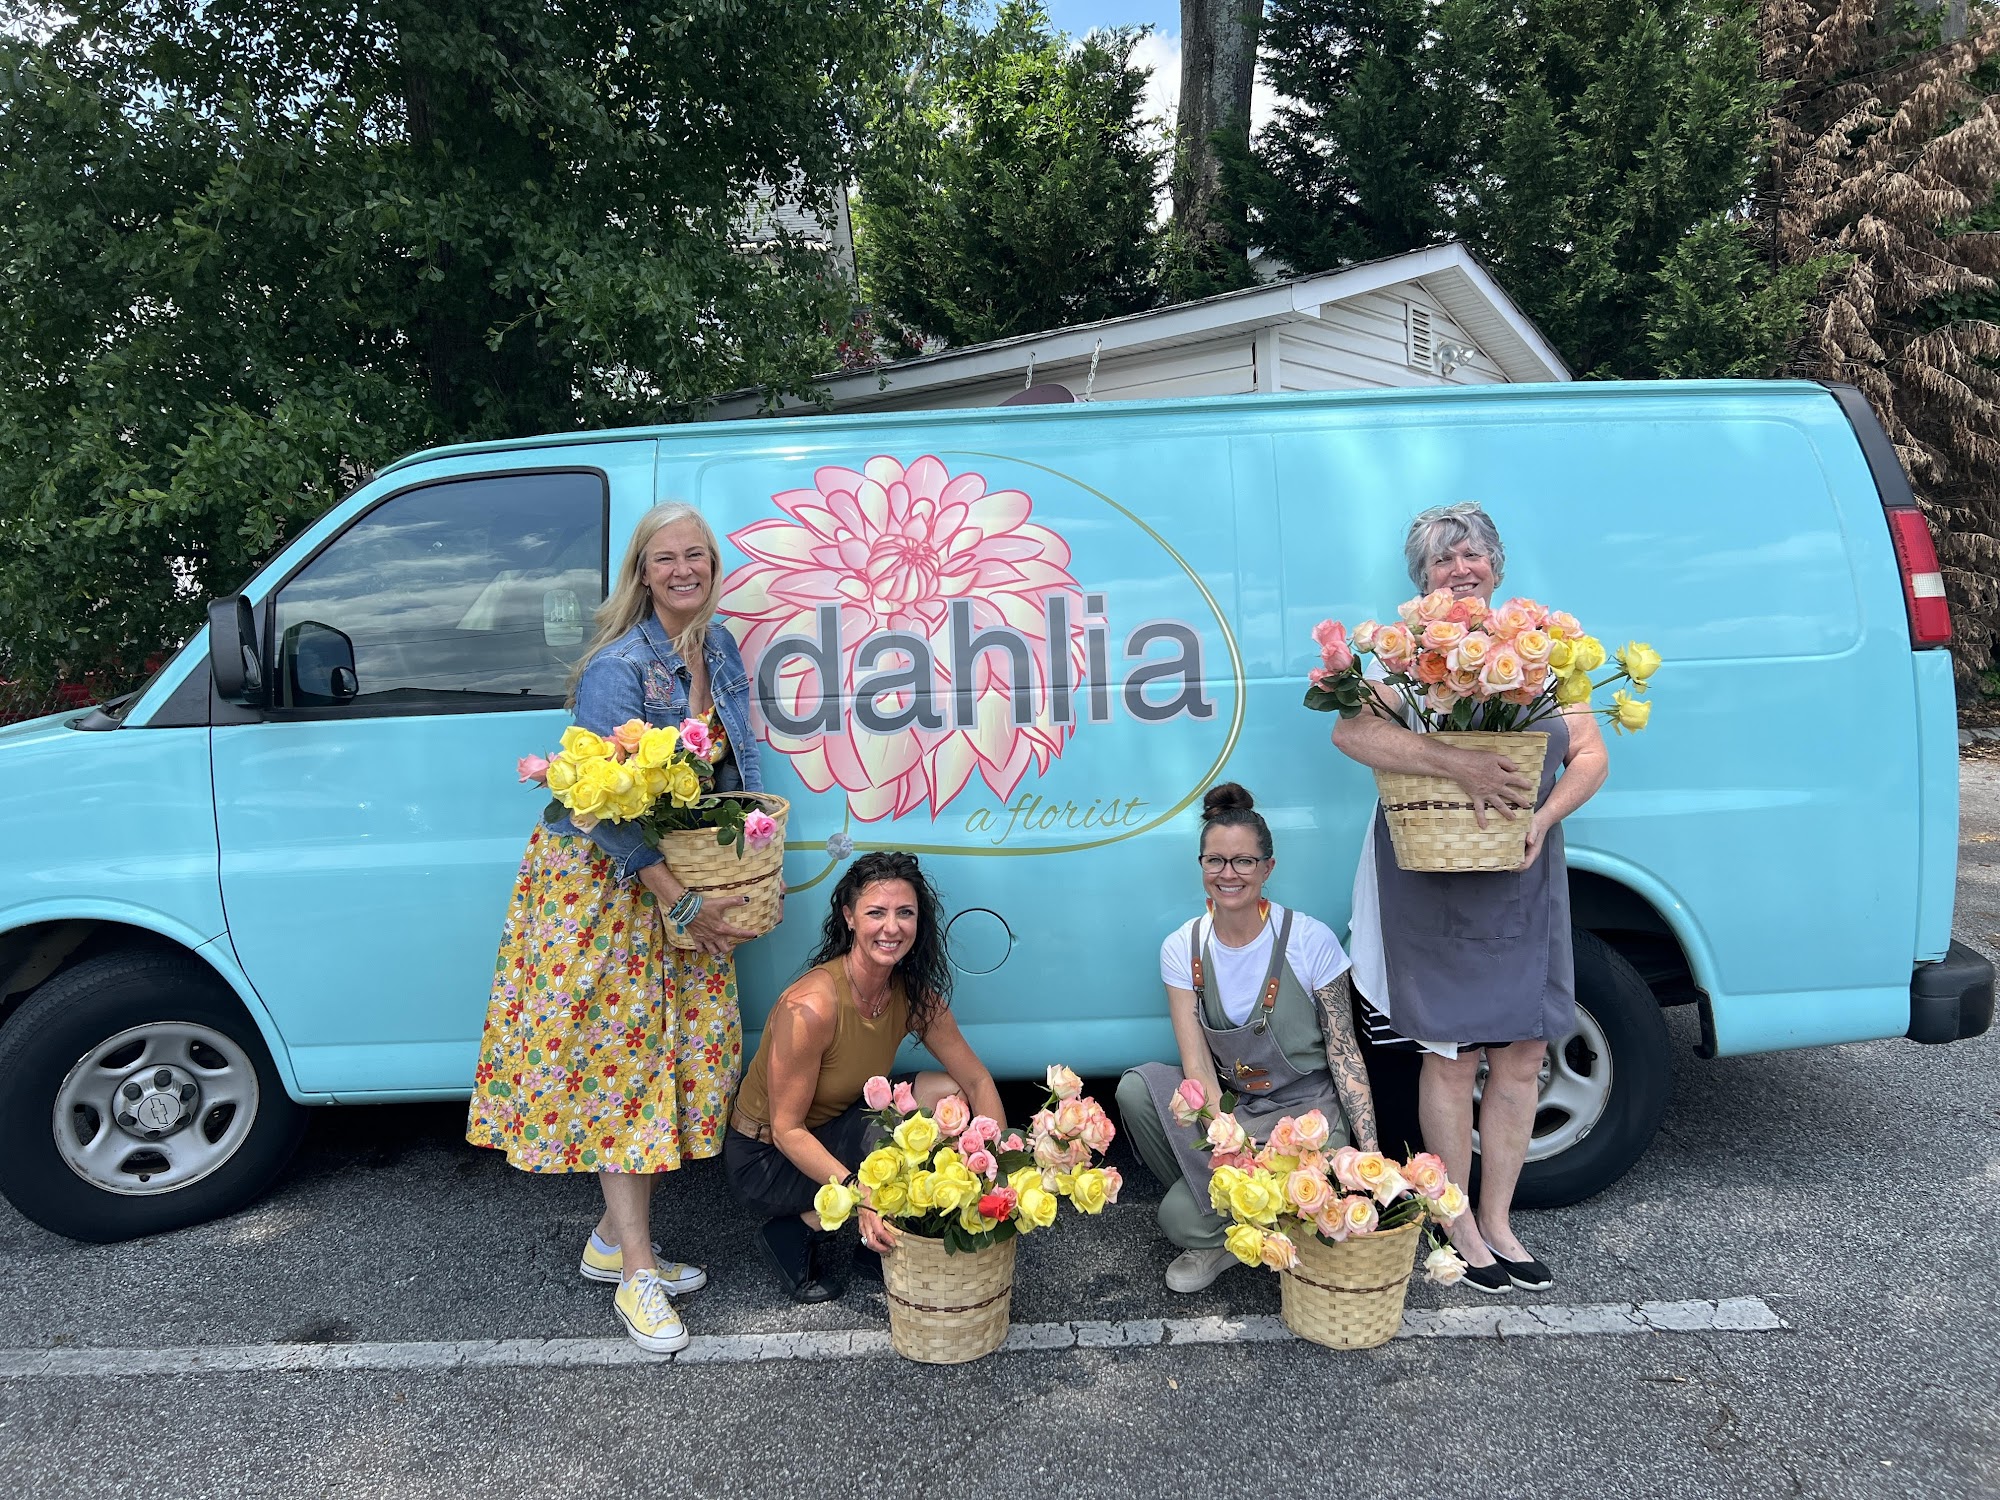 Dahlia A Florist